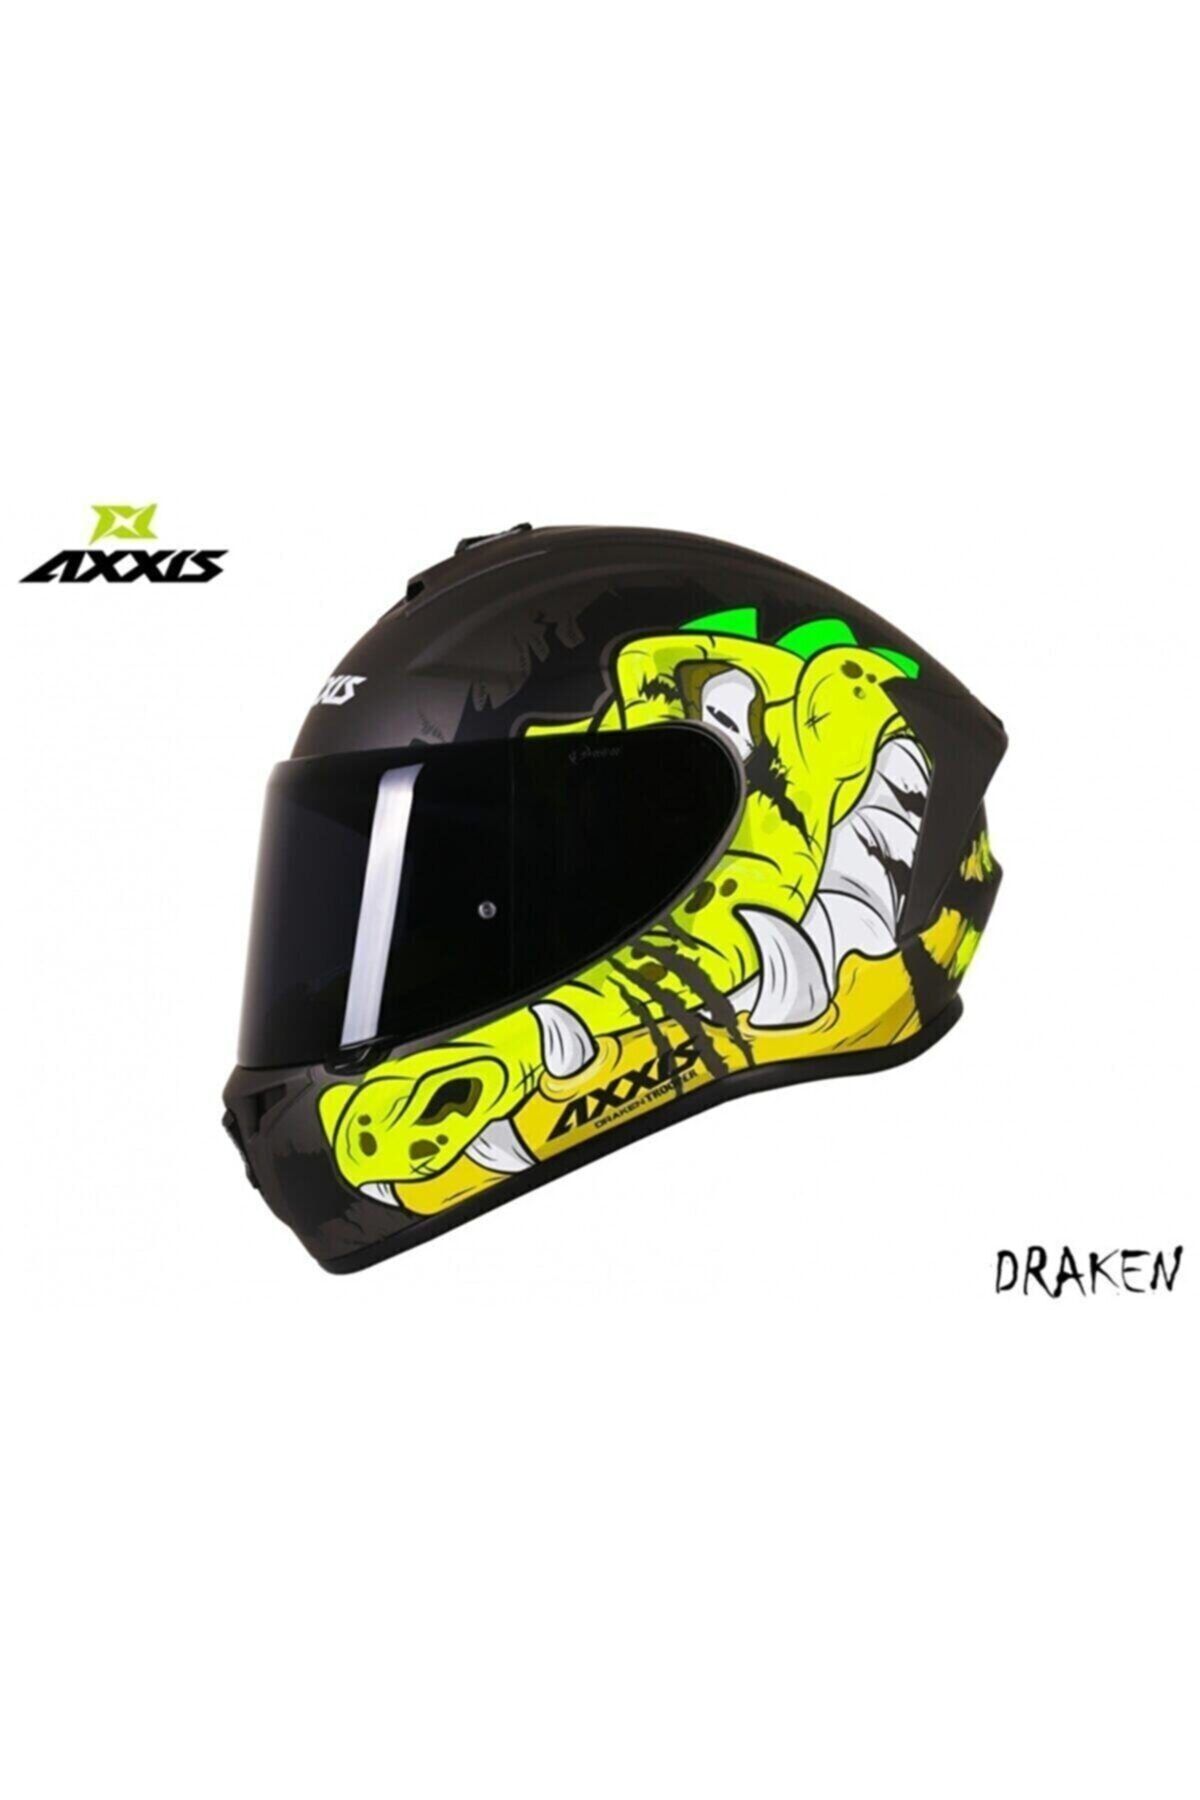 Axxis Draken Trooper Matt Fluo Yellow Motosiklet Kaskı (YENİ MODEL ŞEFFAF VİZÖR)